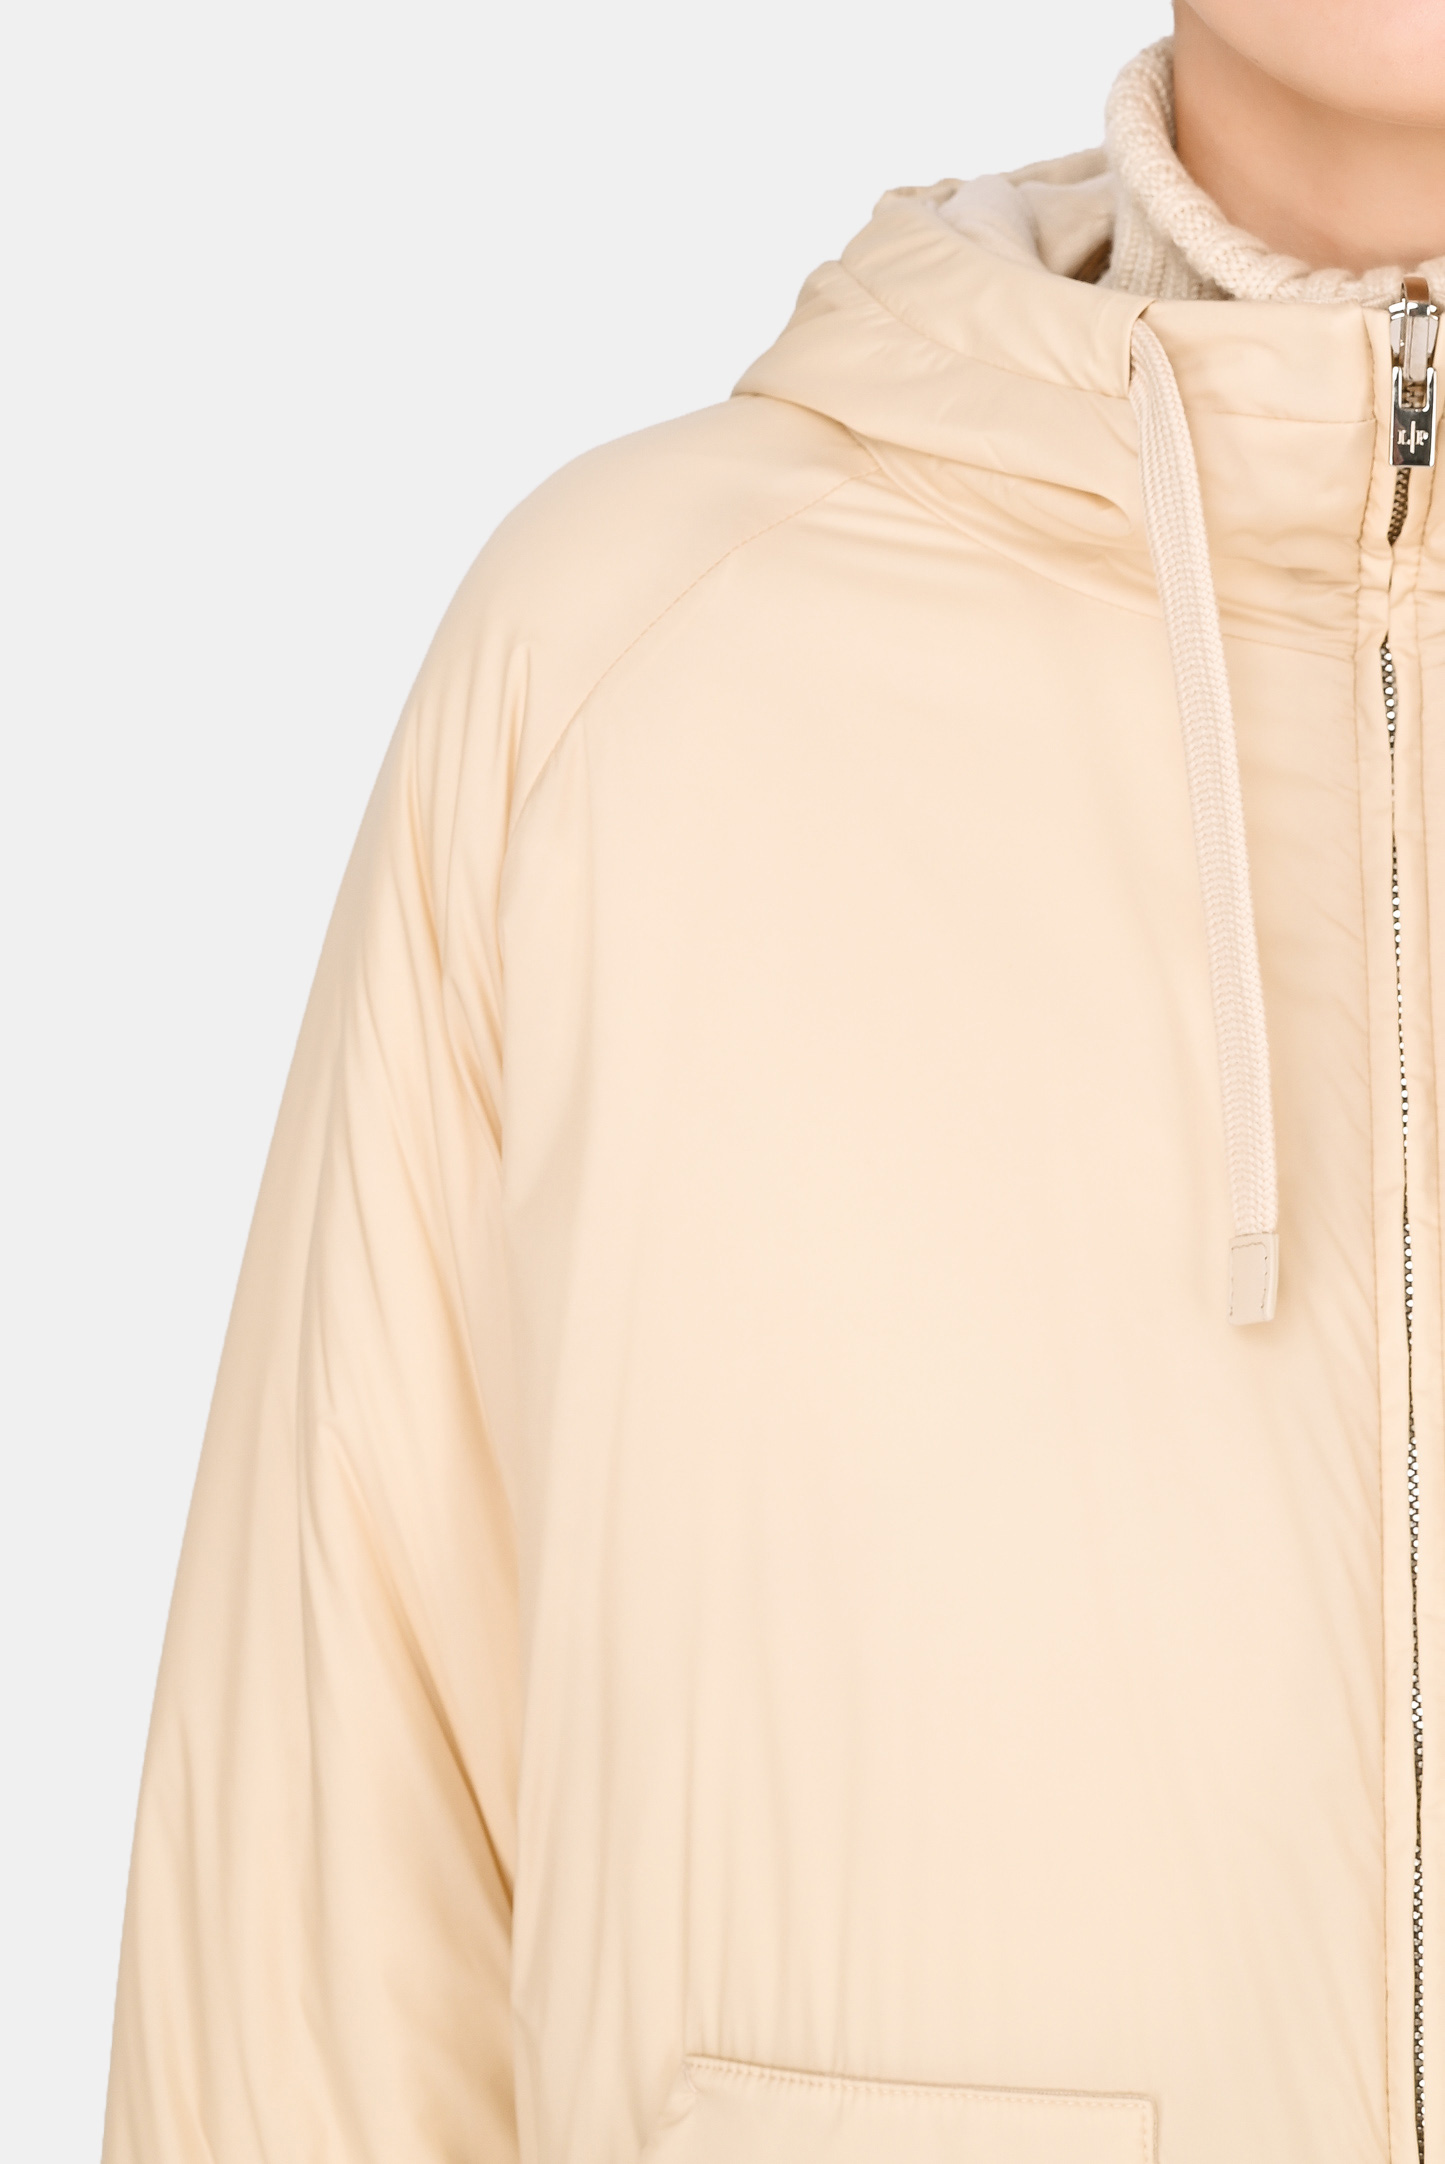 Куртка LORO PIANA F1-FAL7250, цвет: Молочный, Женский